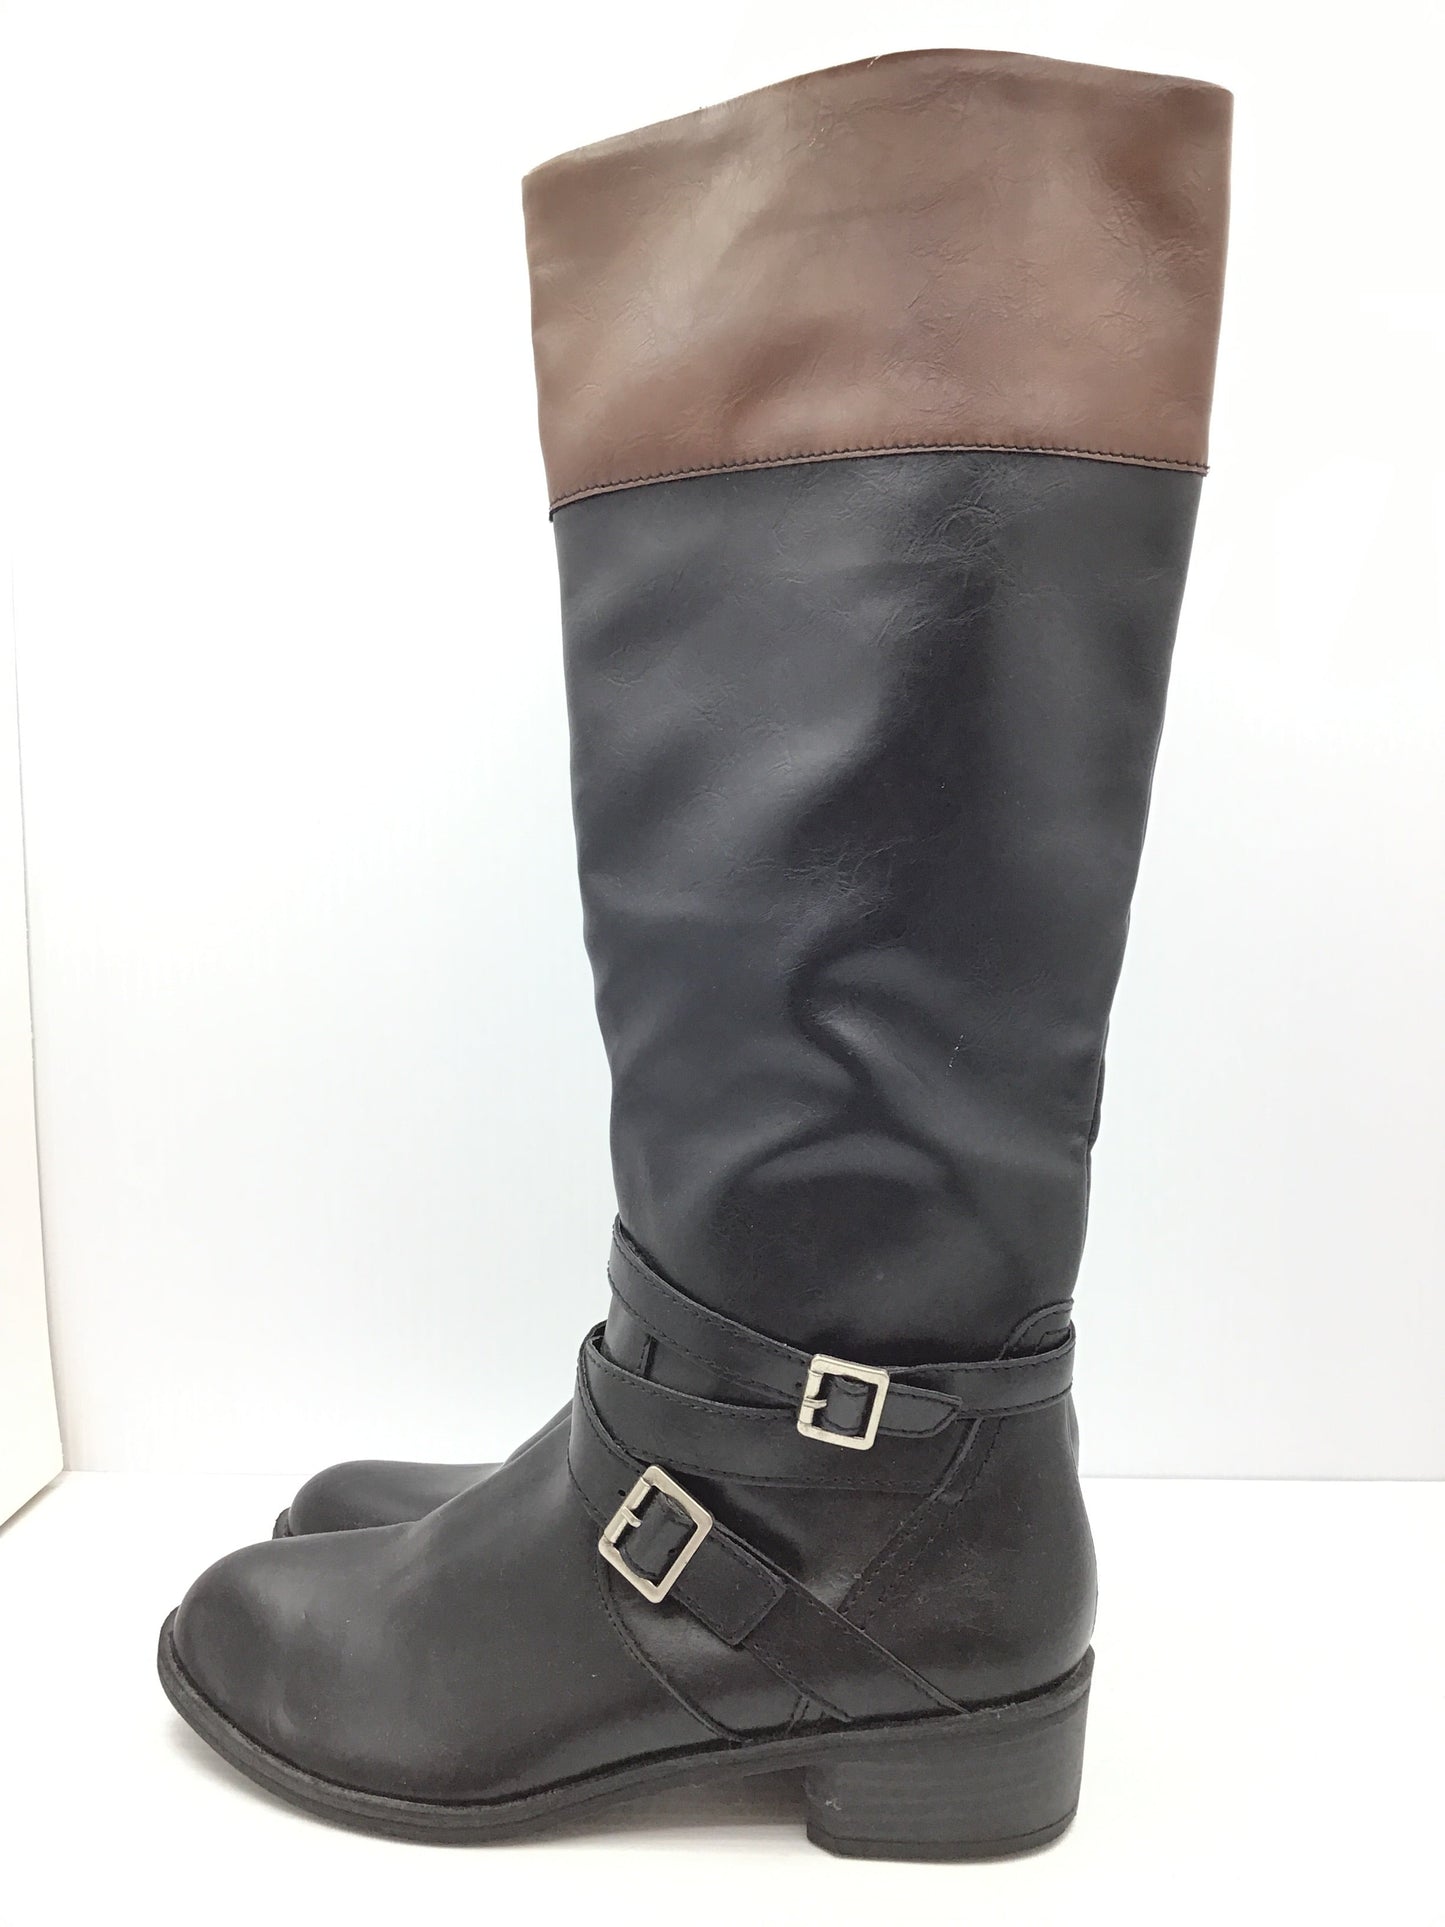 Boots Knee Heels By Arizona  Size: 8.5